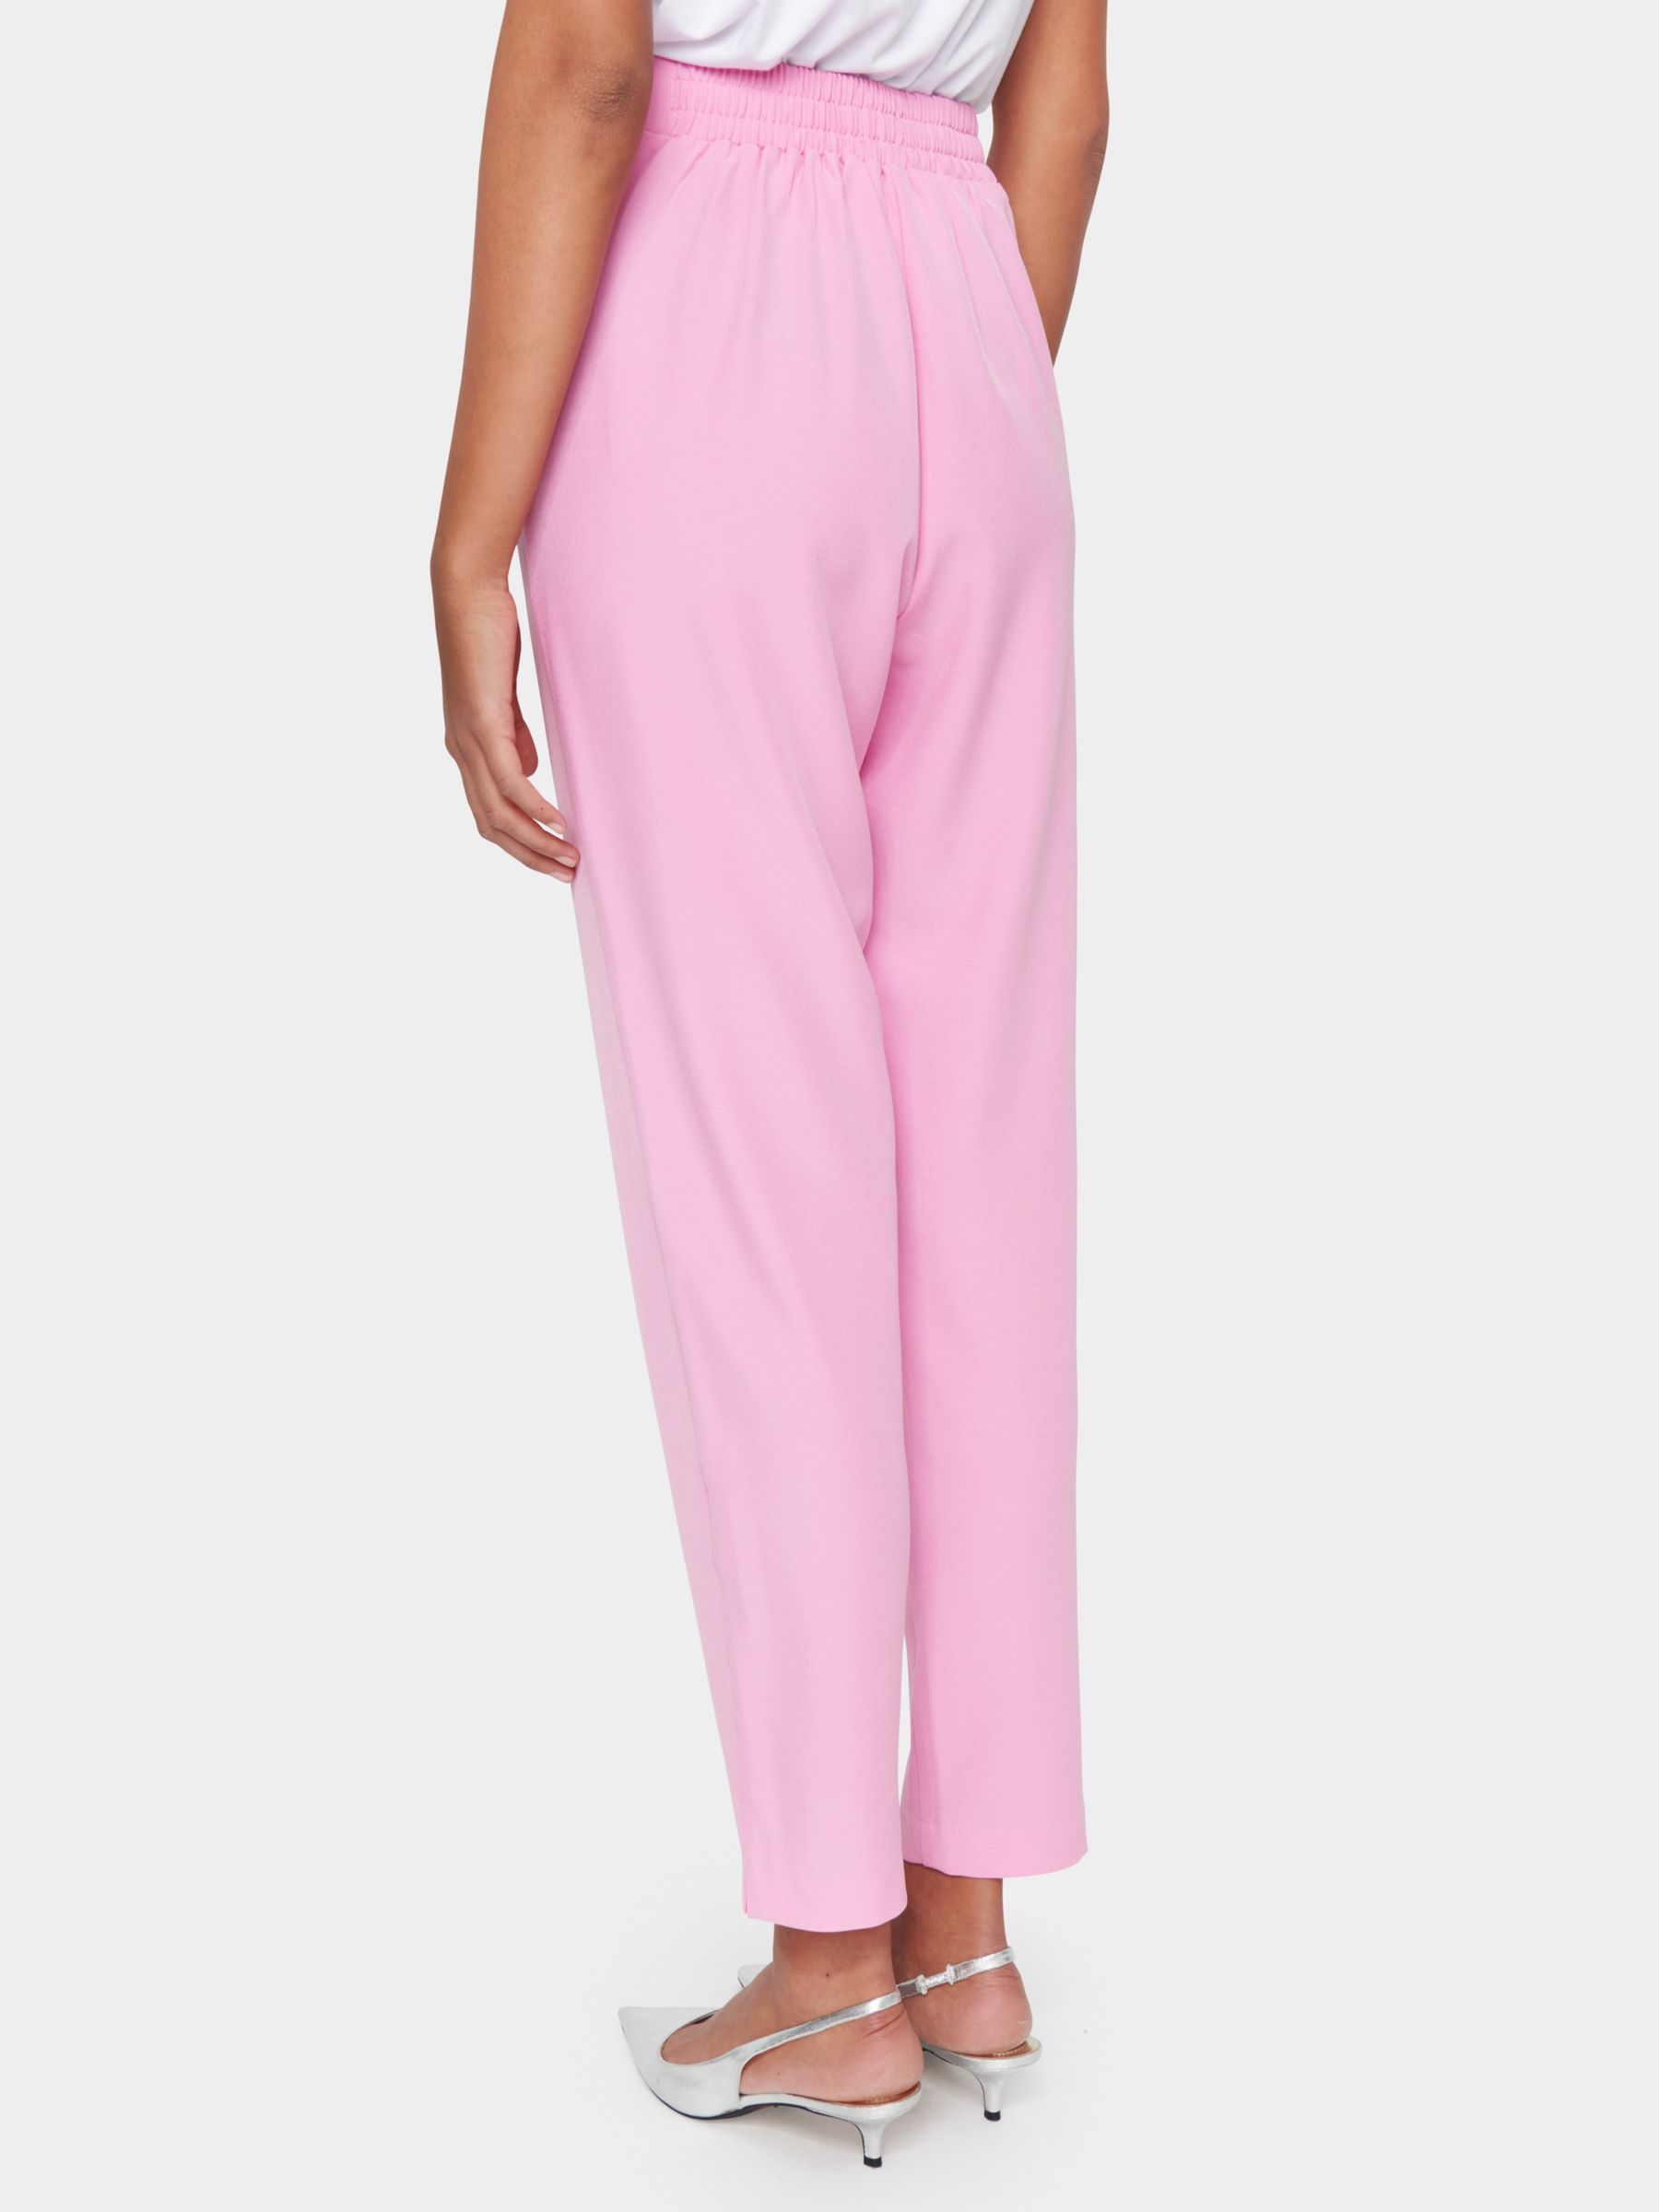 Saint Tropez Celest Elasticated Regular Fit Trousers, Fuchsia Pink, XS